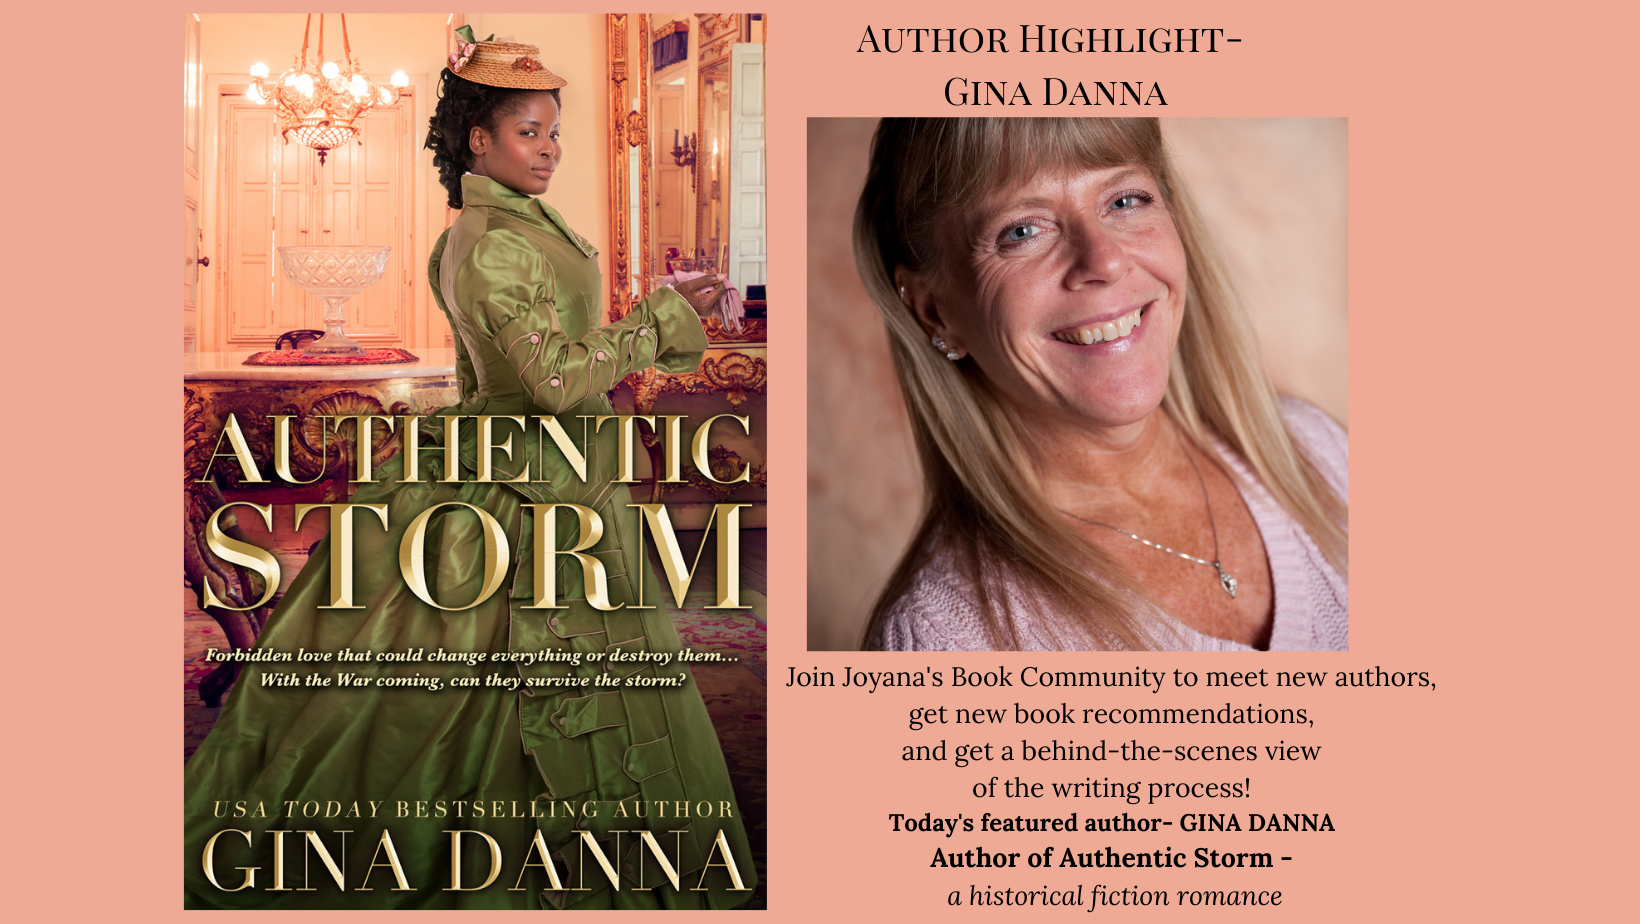 Author Highlight- Meet Gina Danna